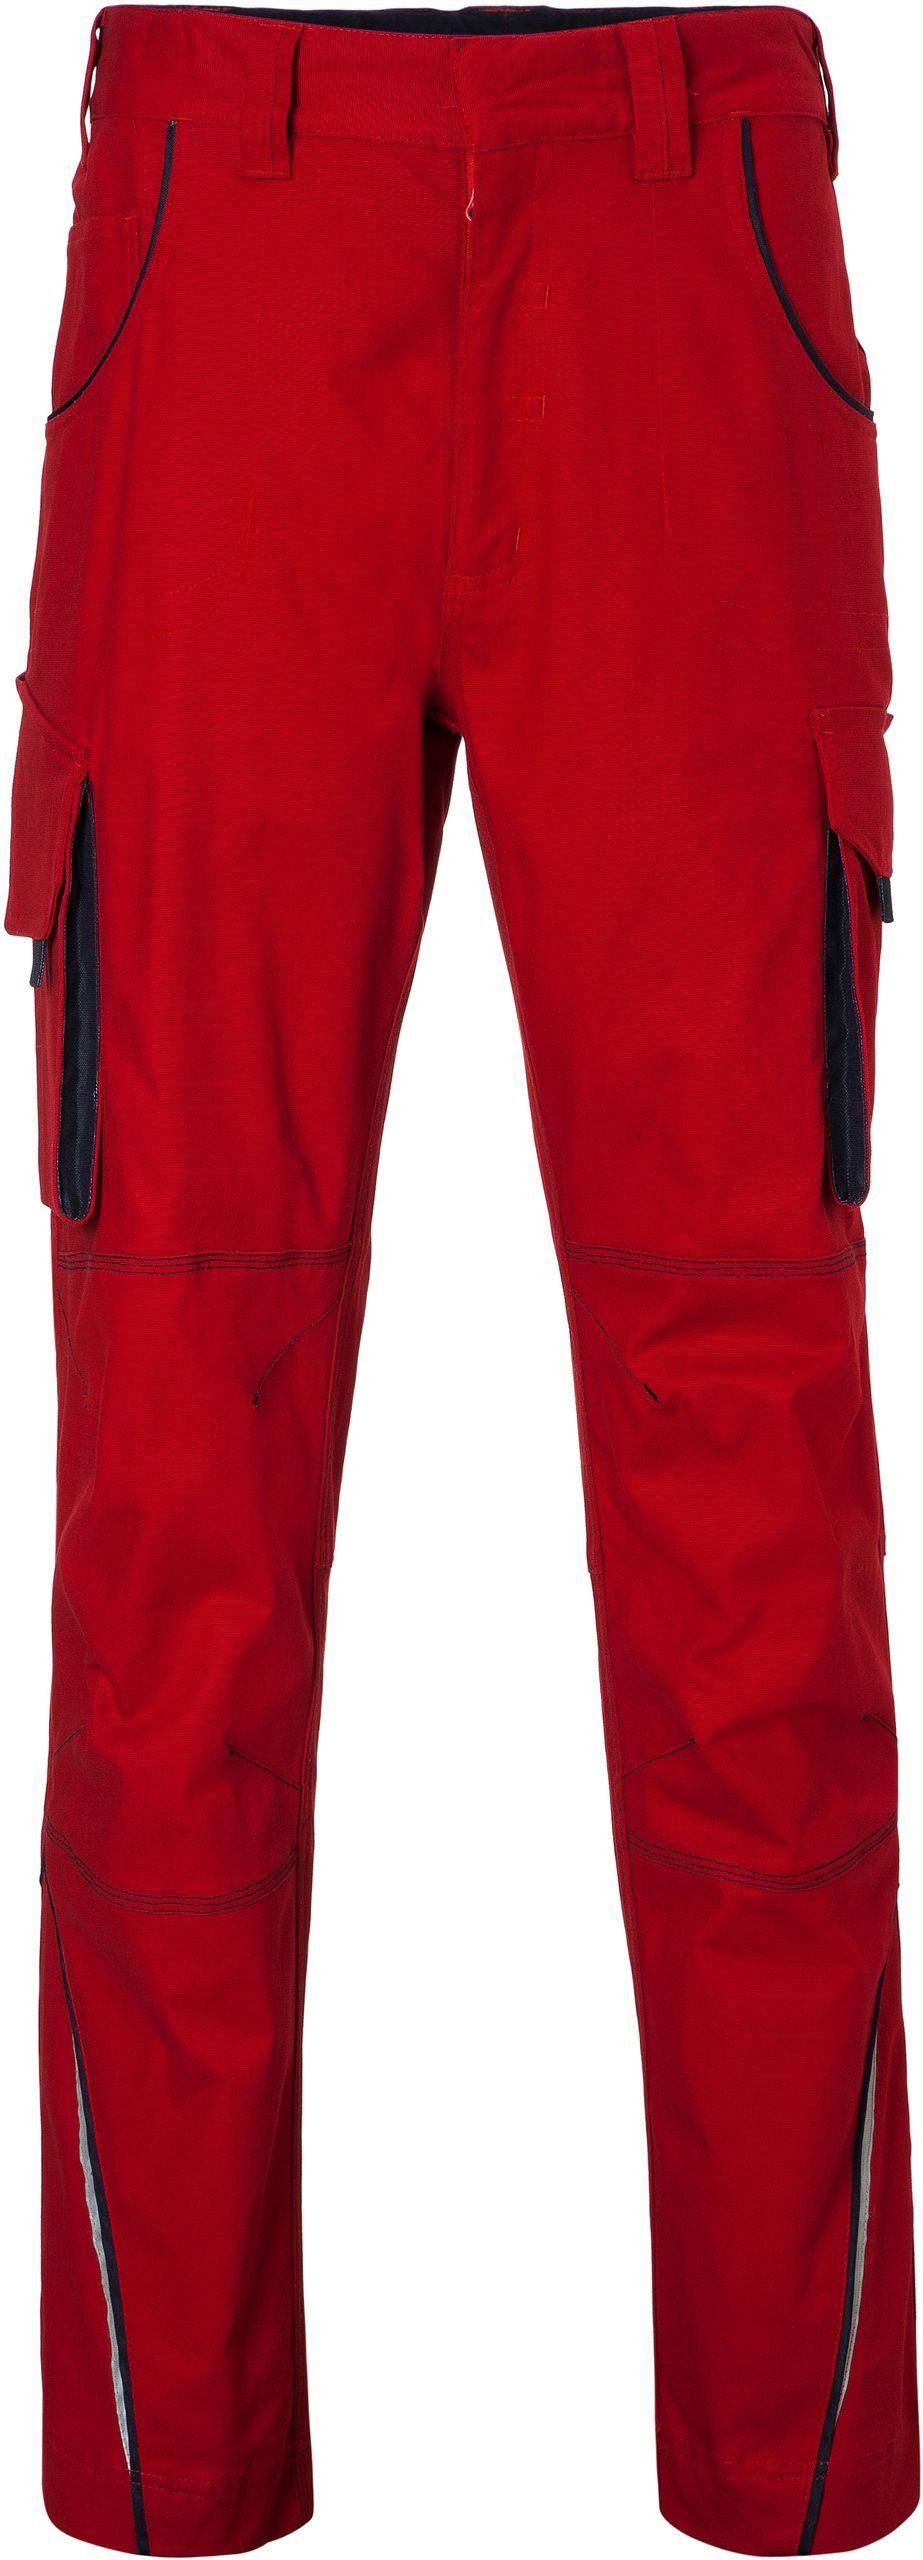 James & Nicholson Arbeitshose Workwear Hose red/navy FaS50847